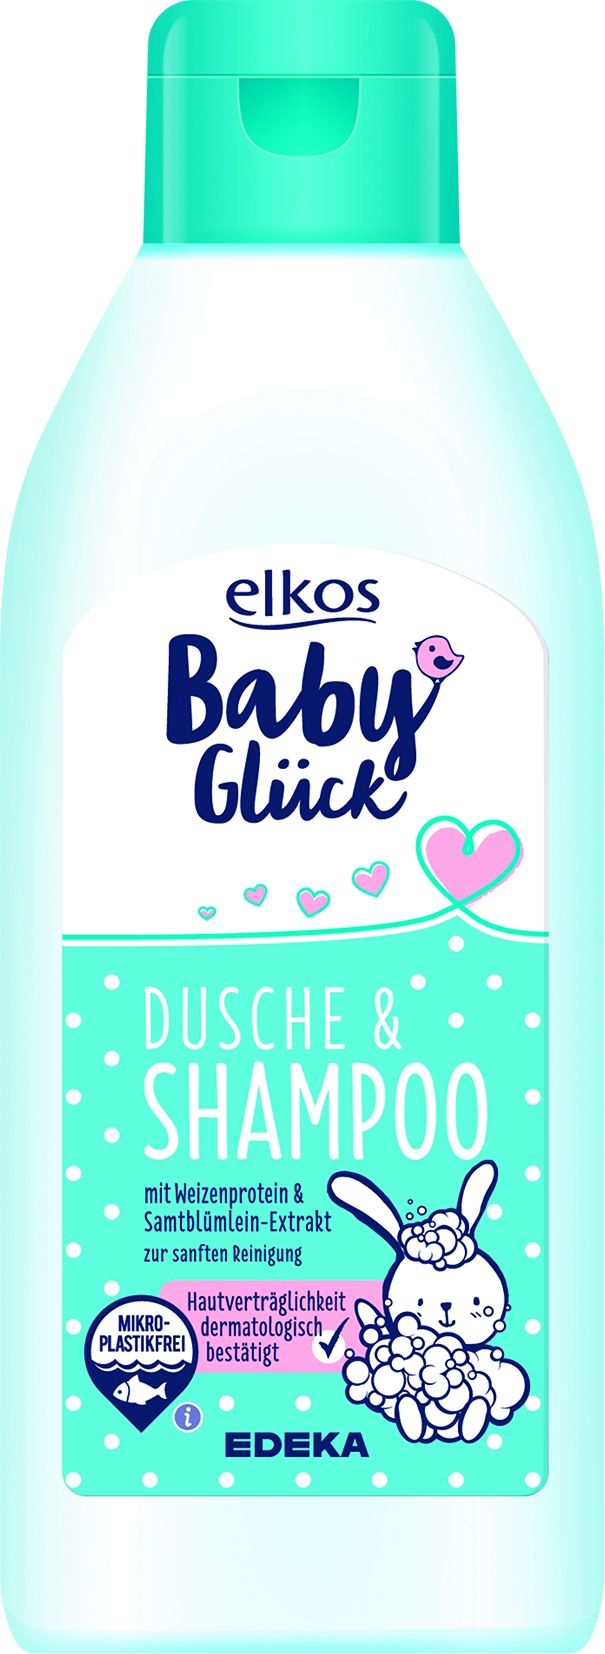 Elkos Repair Shampoo - Repair Shampoo